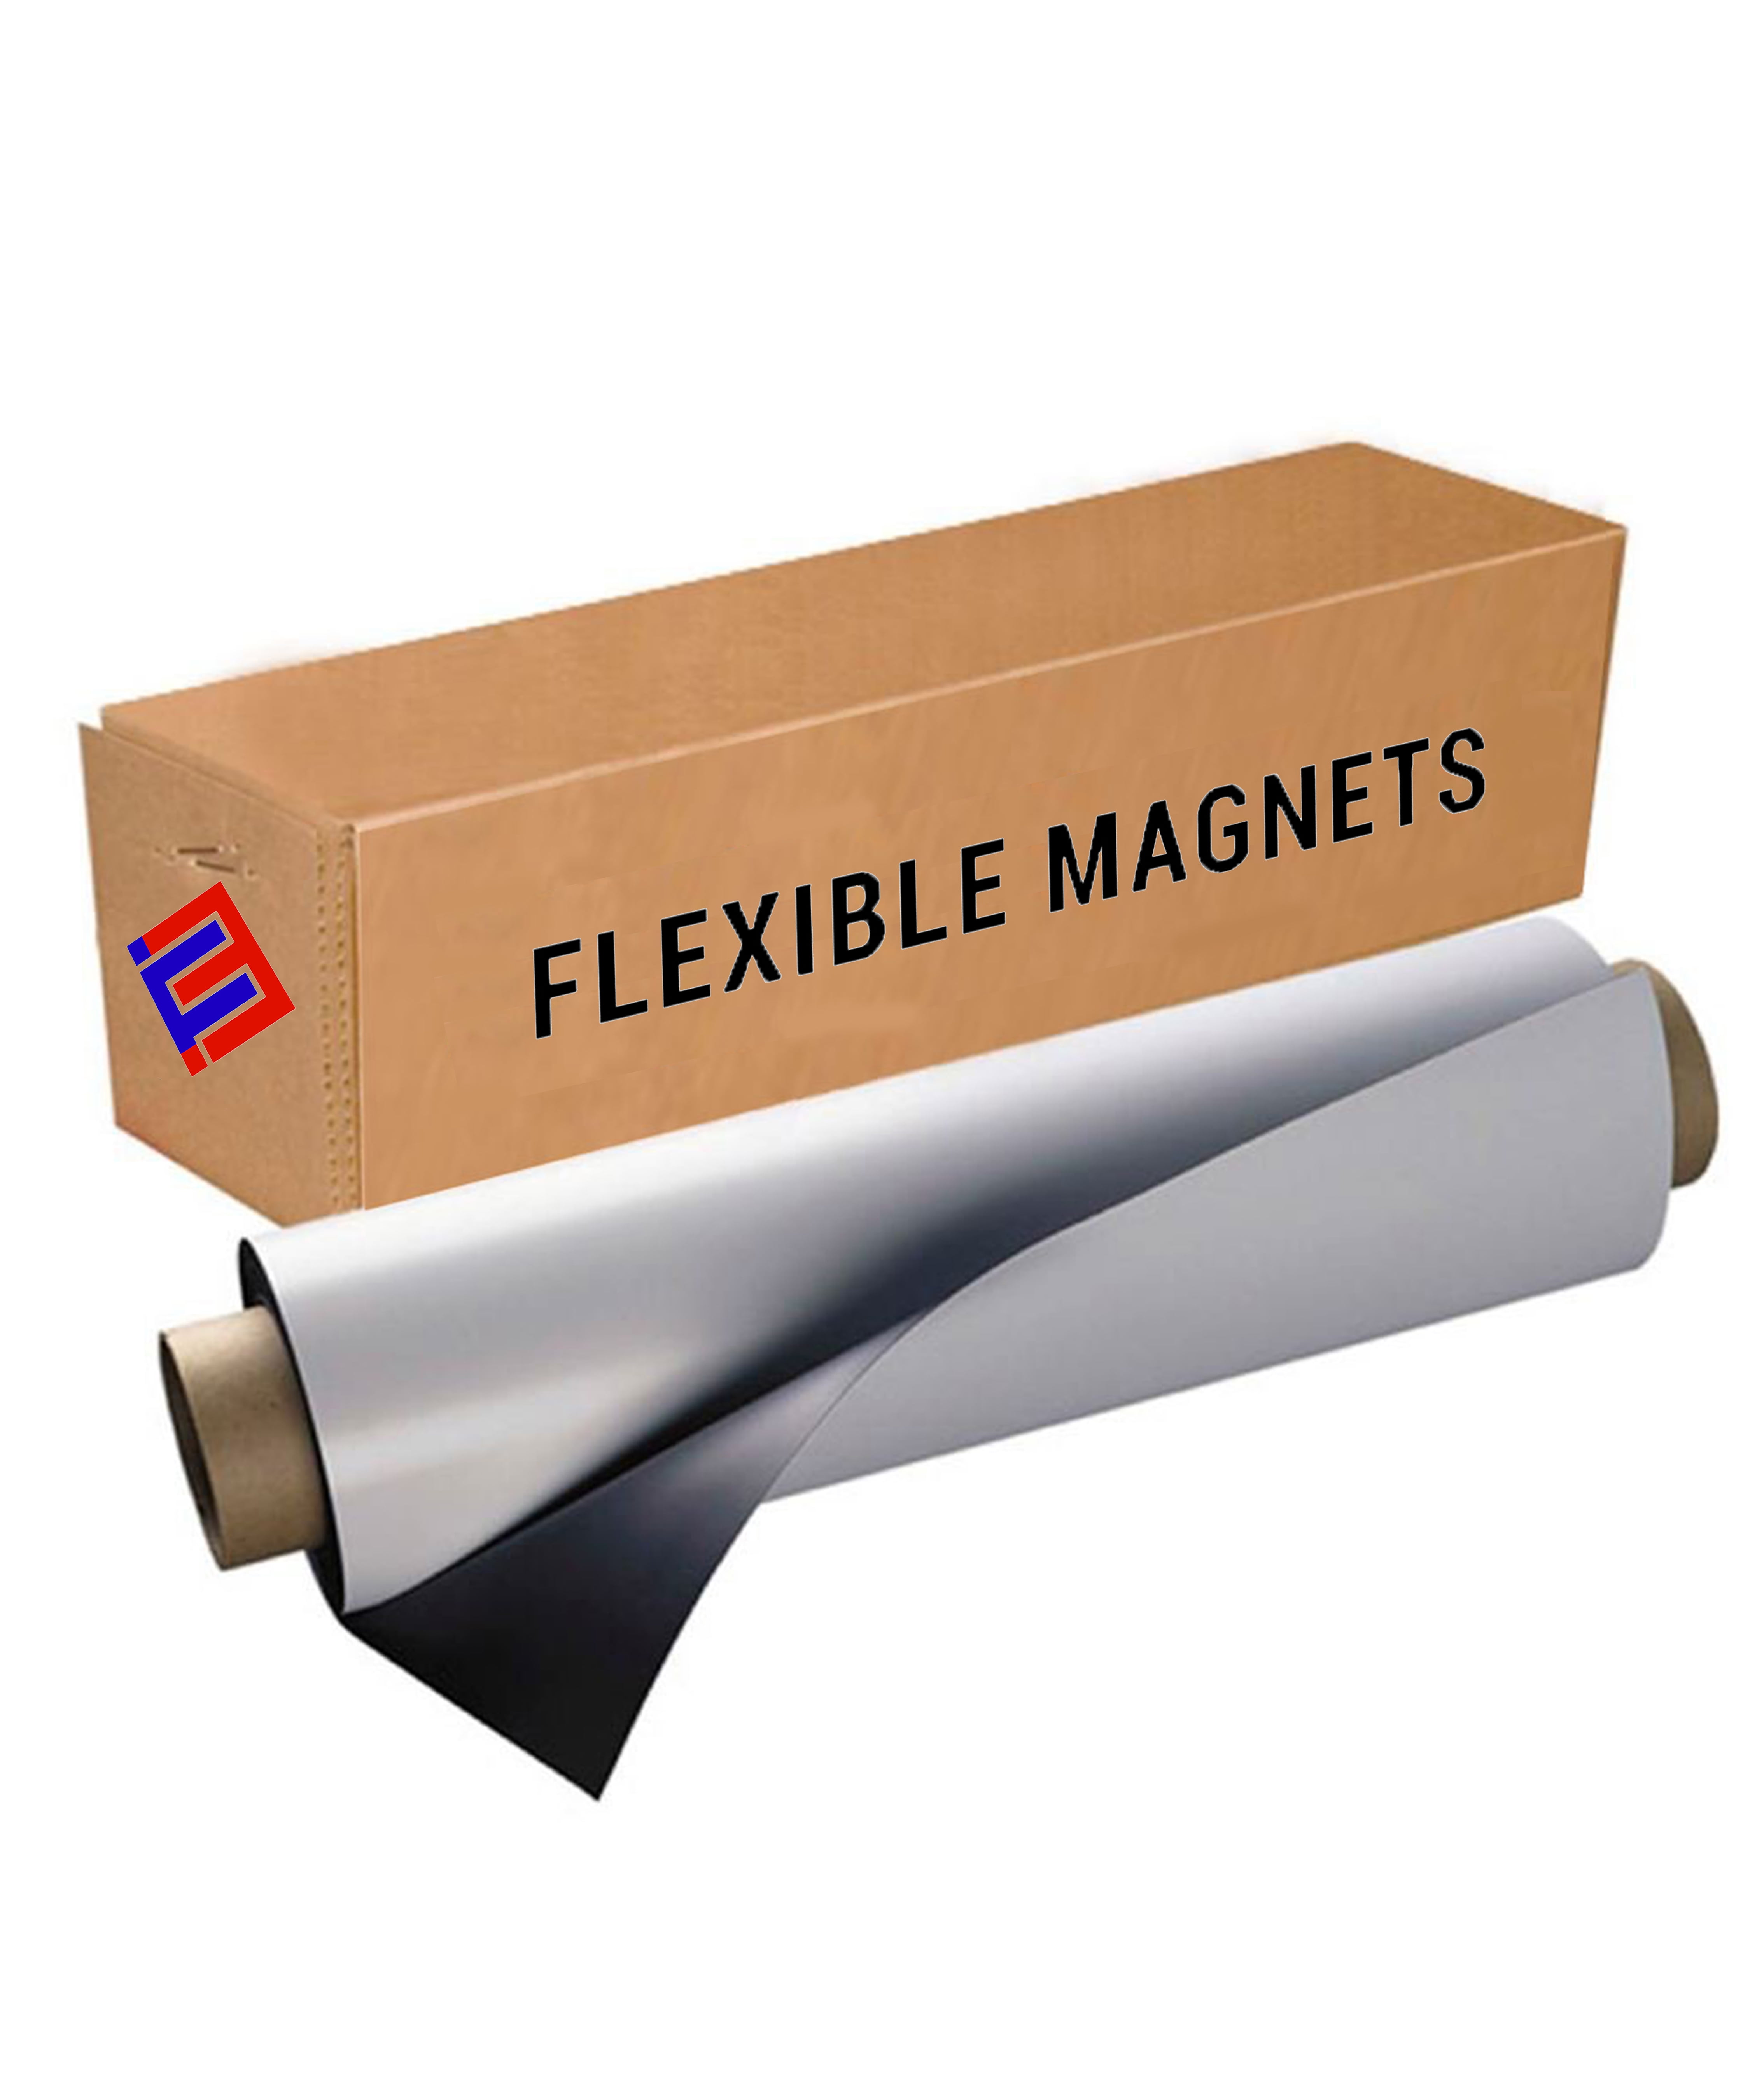 6+1 Self adhesive flexible refrigerator magnet sheets 10x7.5cm 4x3" peel & stick 